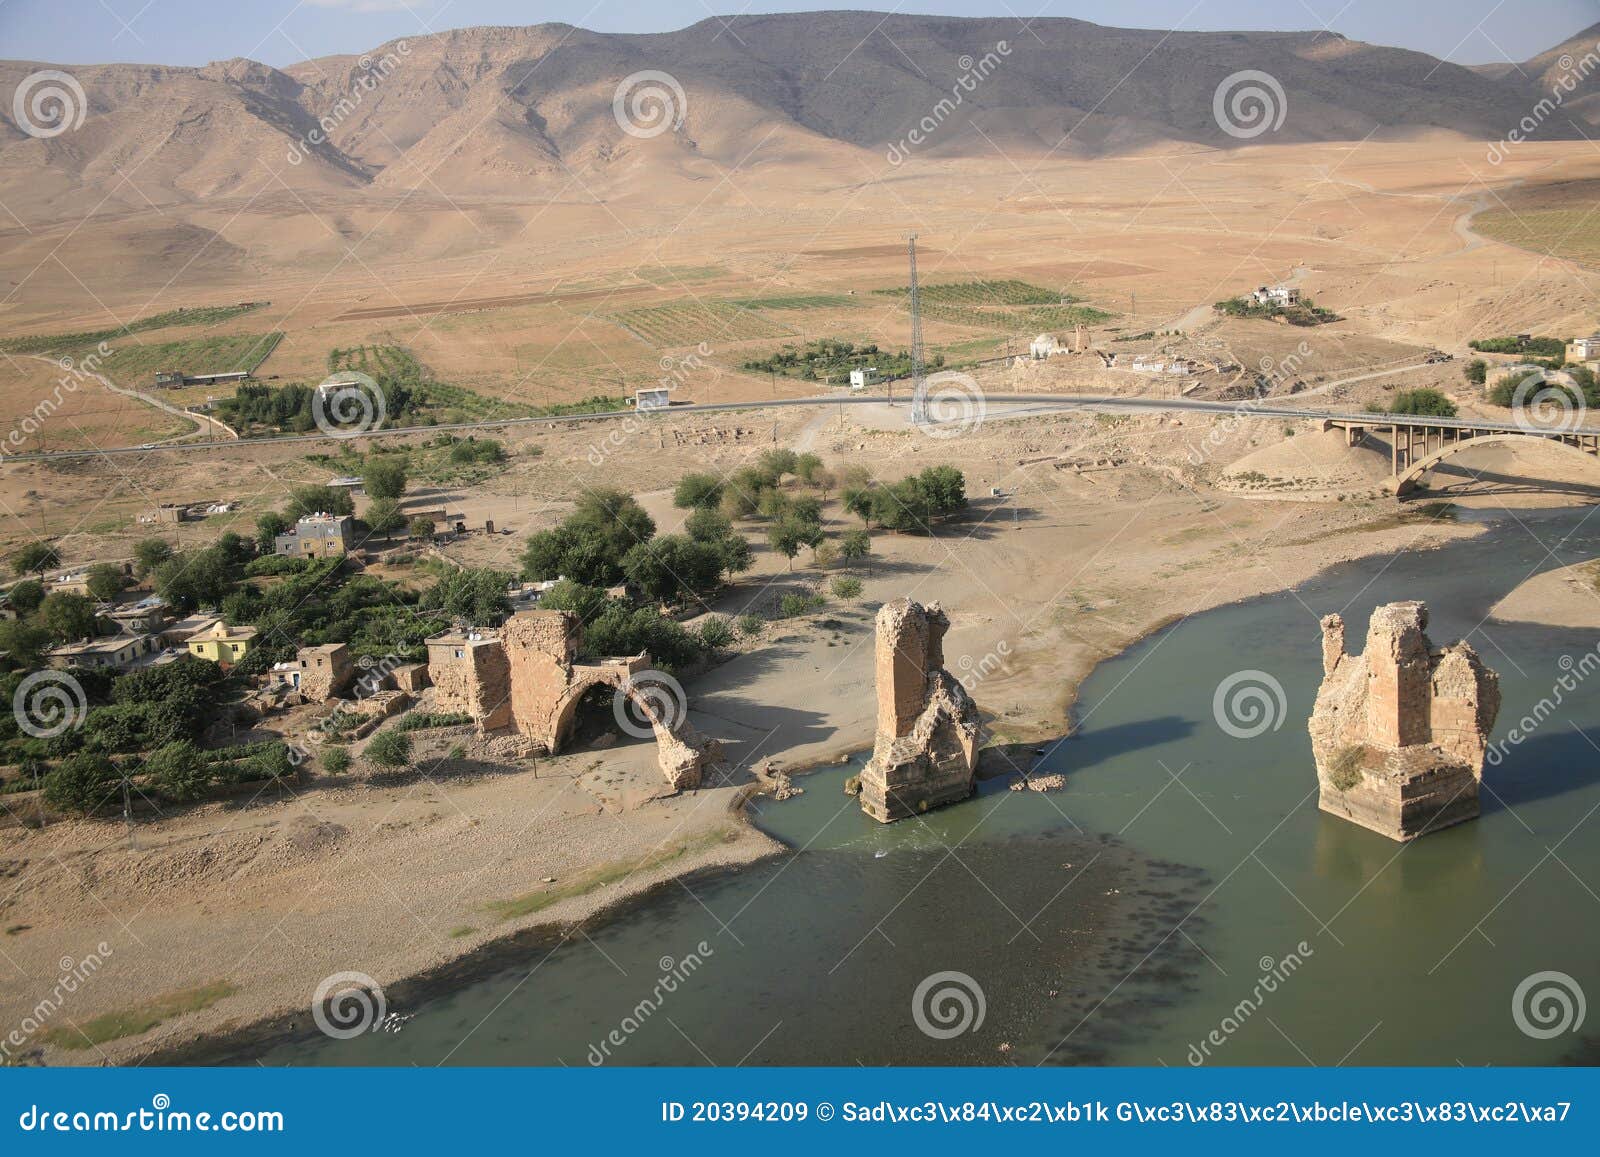 tigris river and hasankeyf village